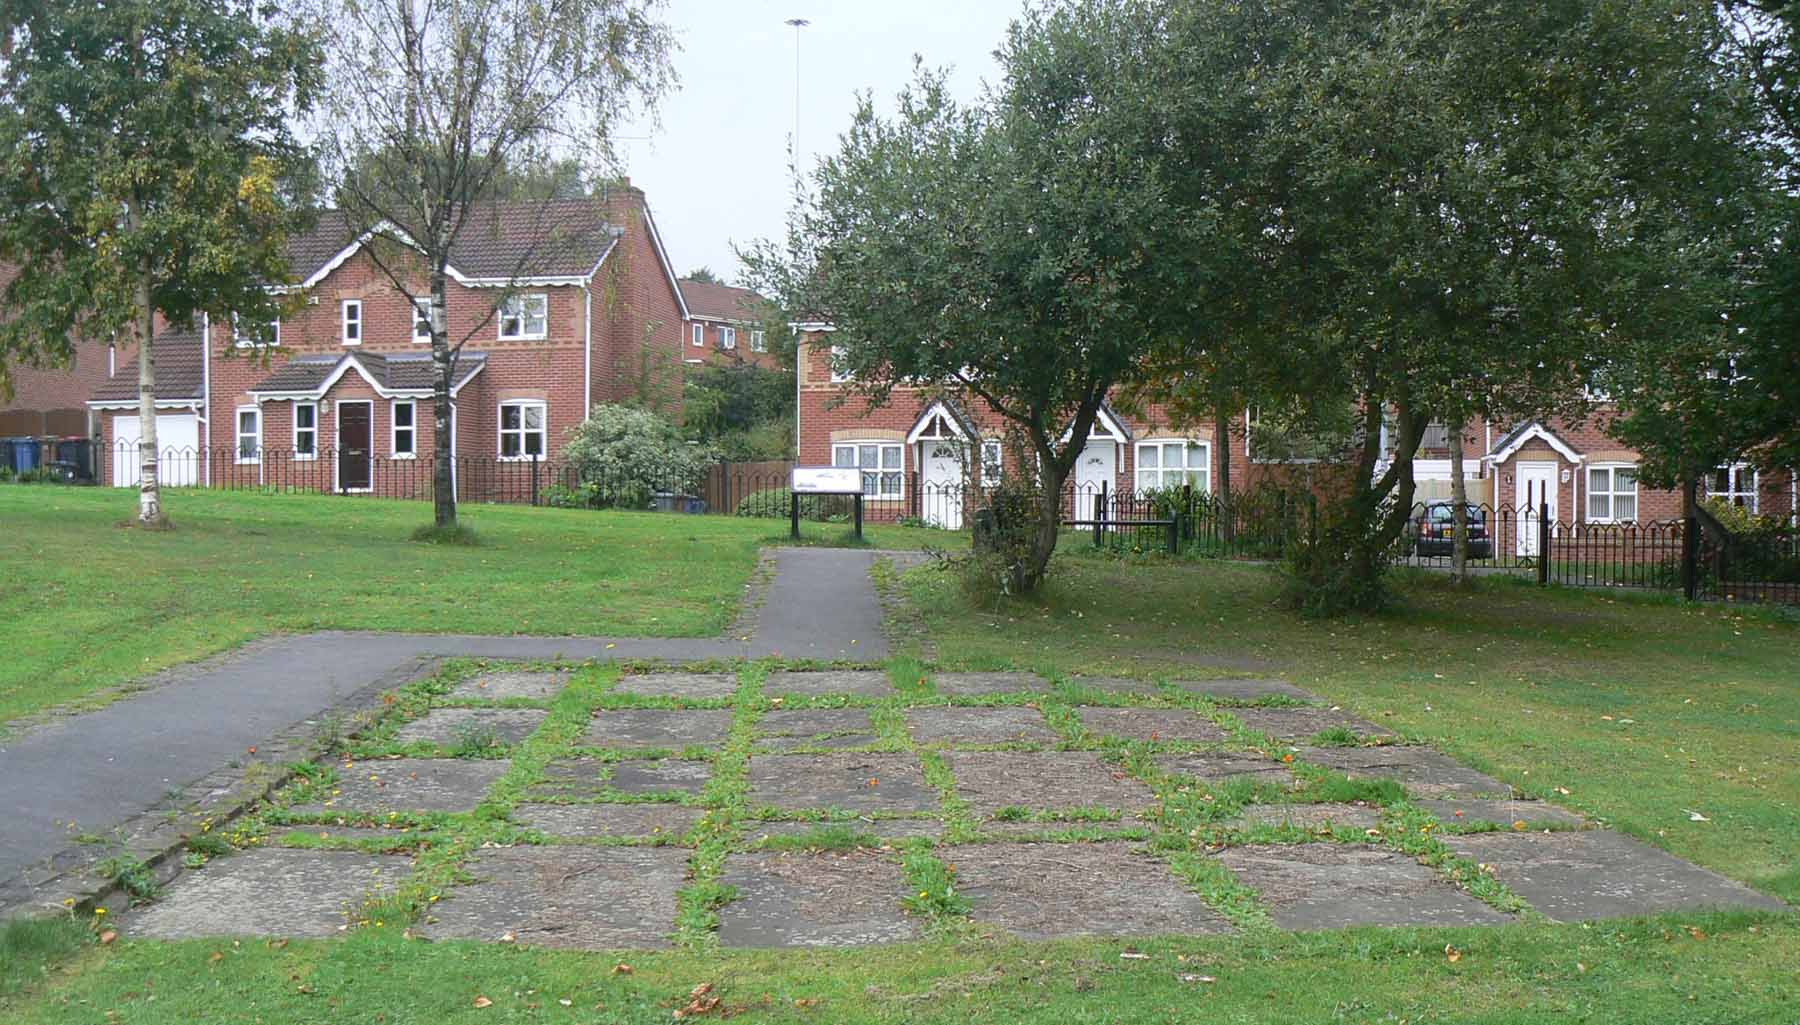 The former cemetery of St Thomas, Pendleton